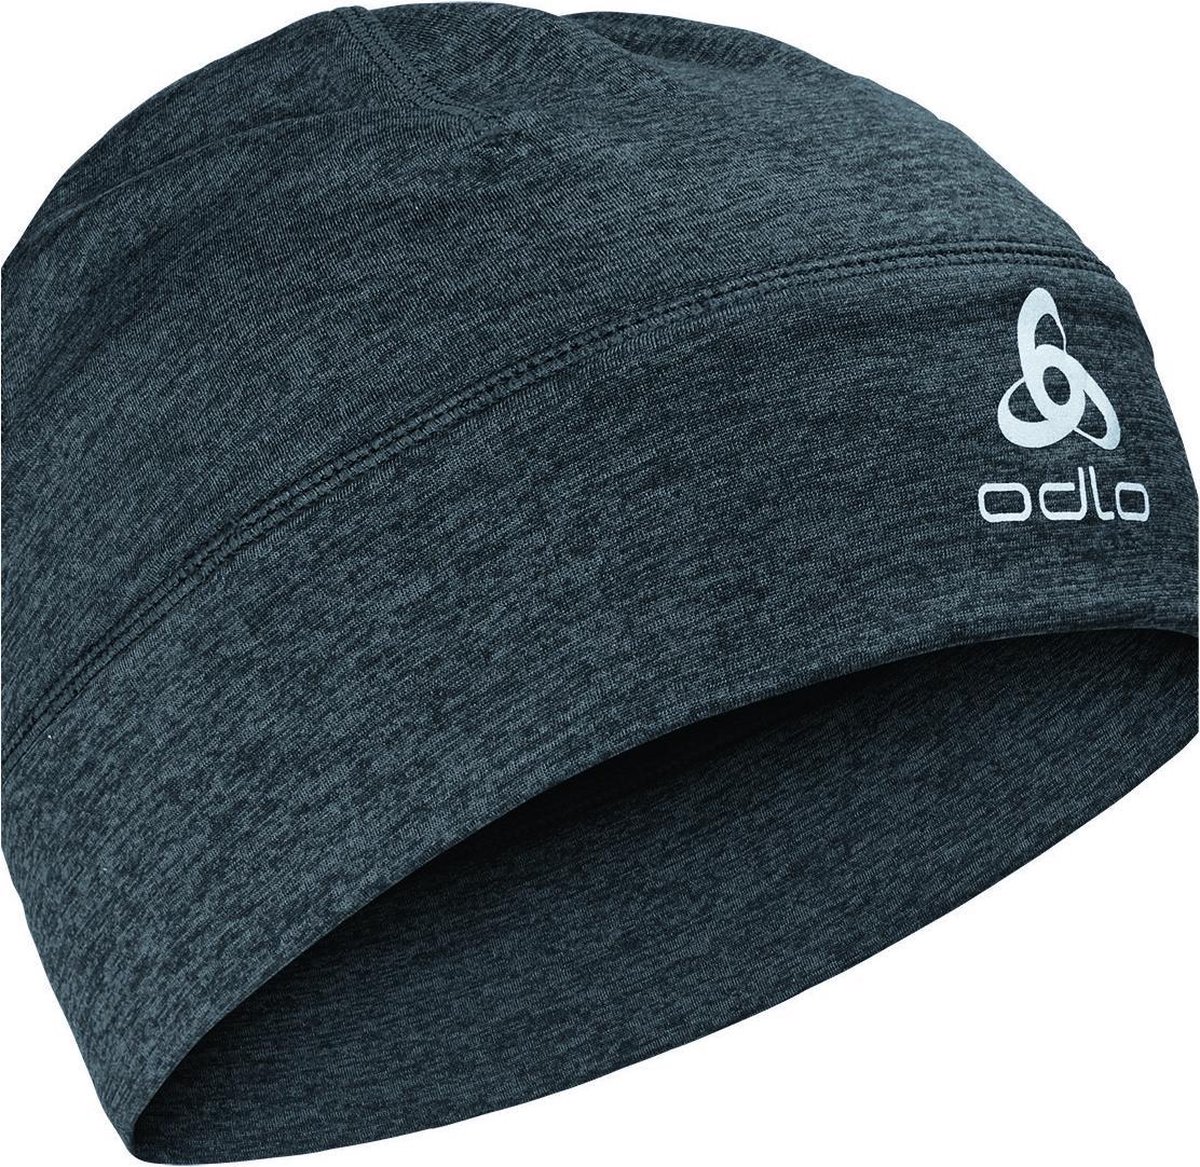 Odlo Hat MILLENNIUM - Maat One size | bol.com